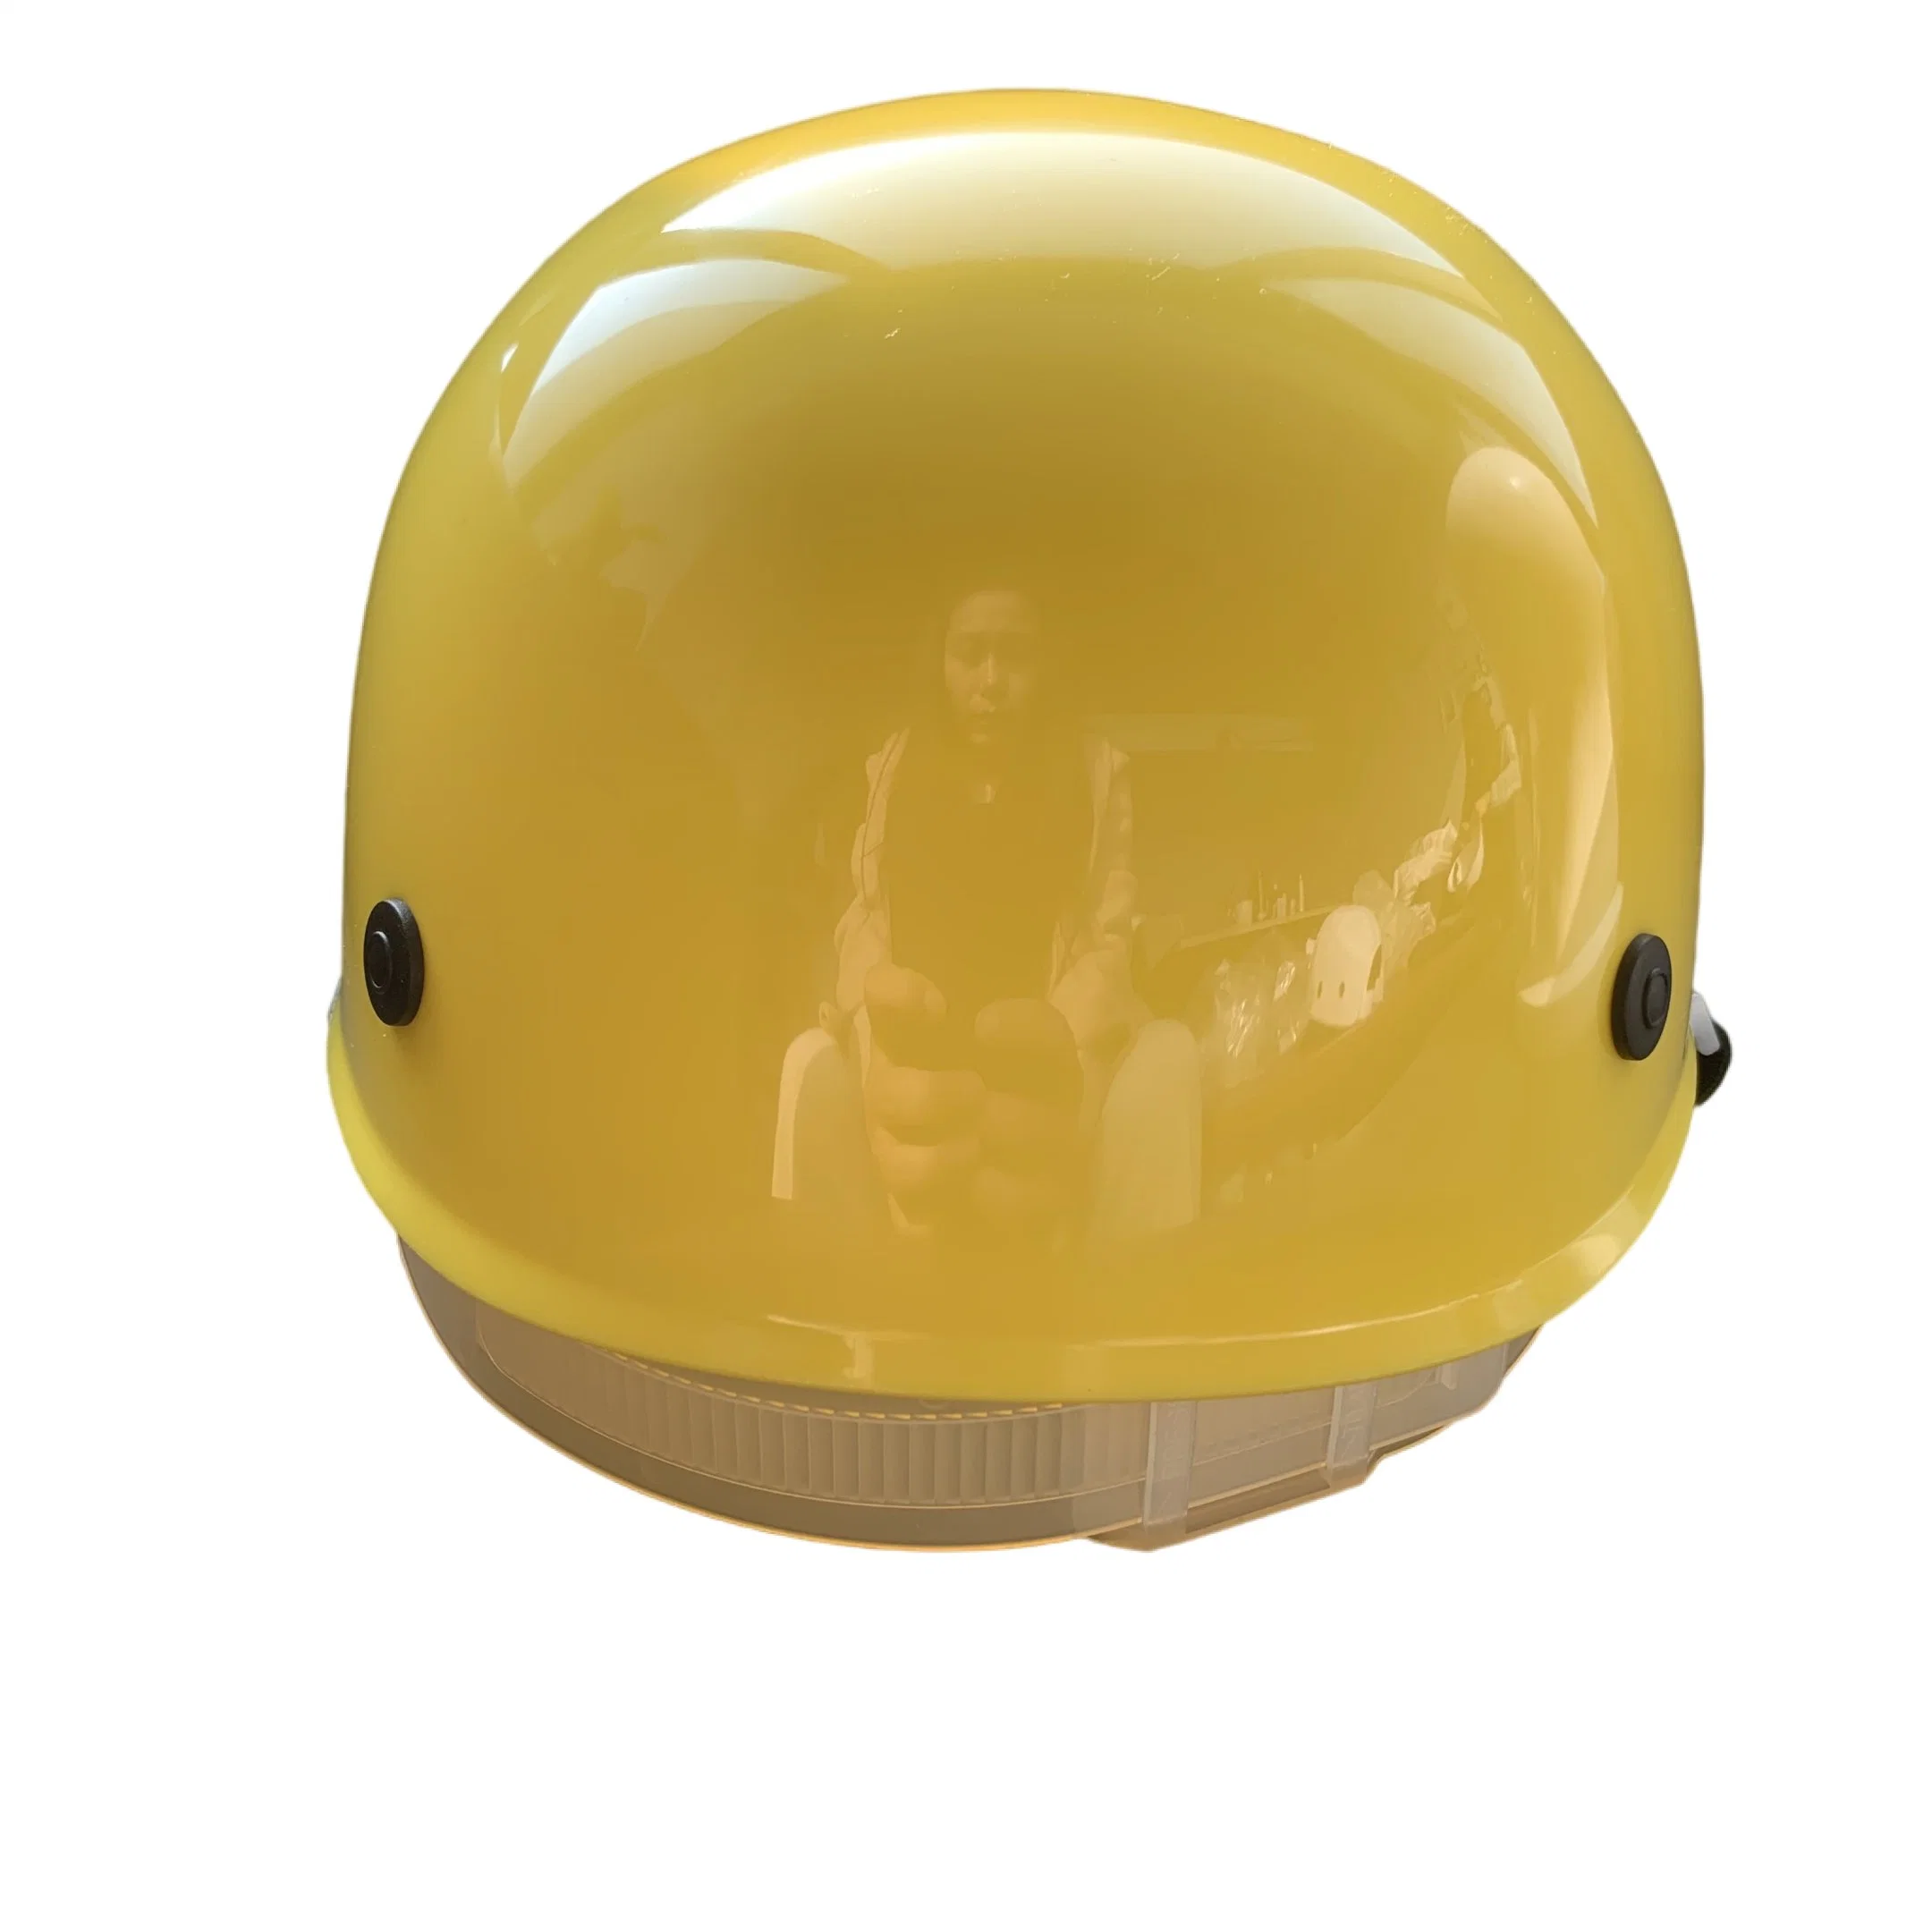 Plastic En397 Industrial Construction Breathable Safety Helmet Bump Cap